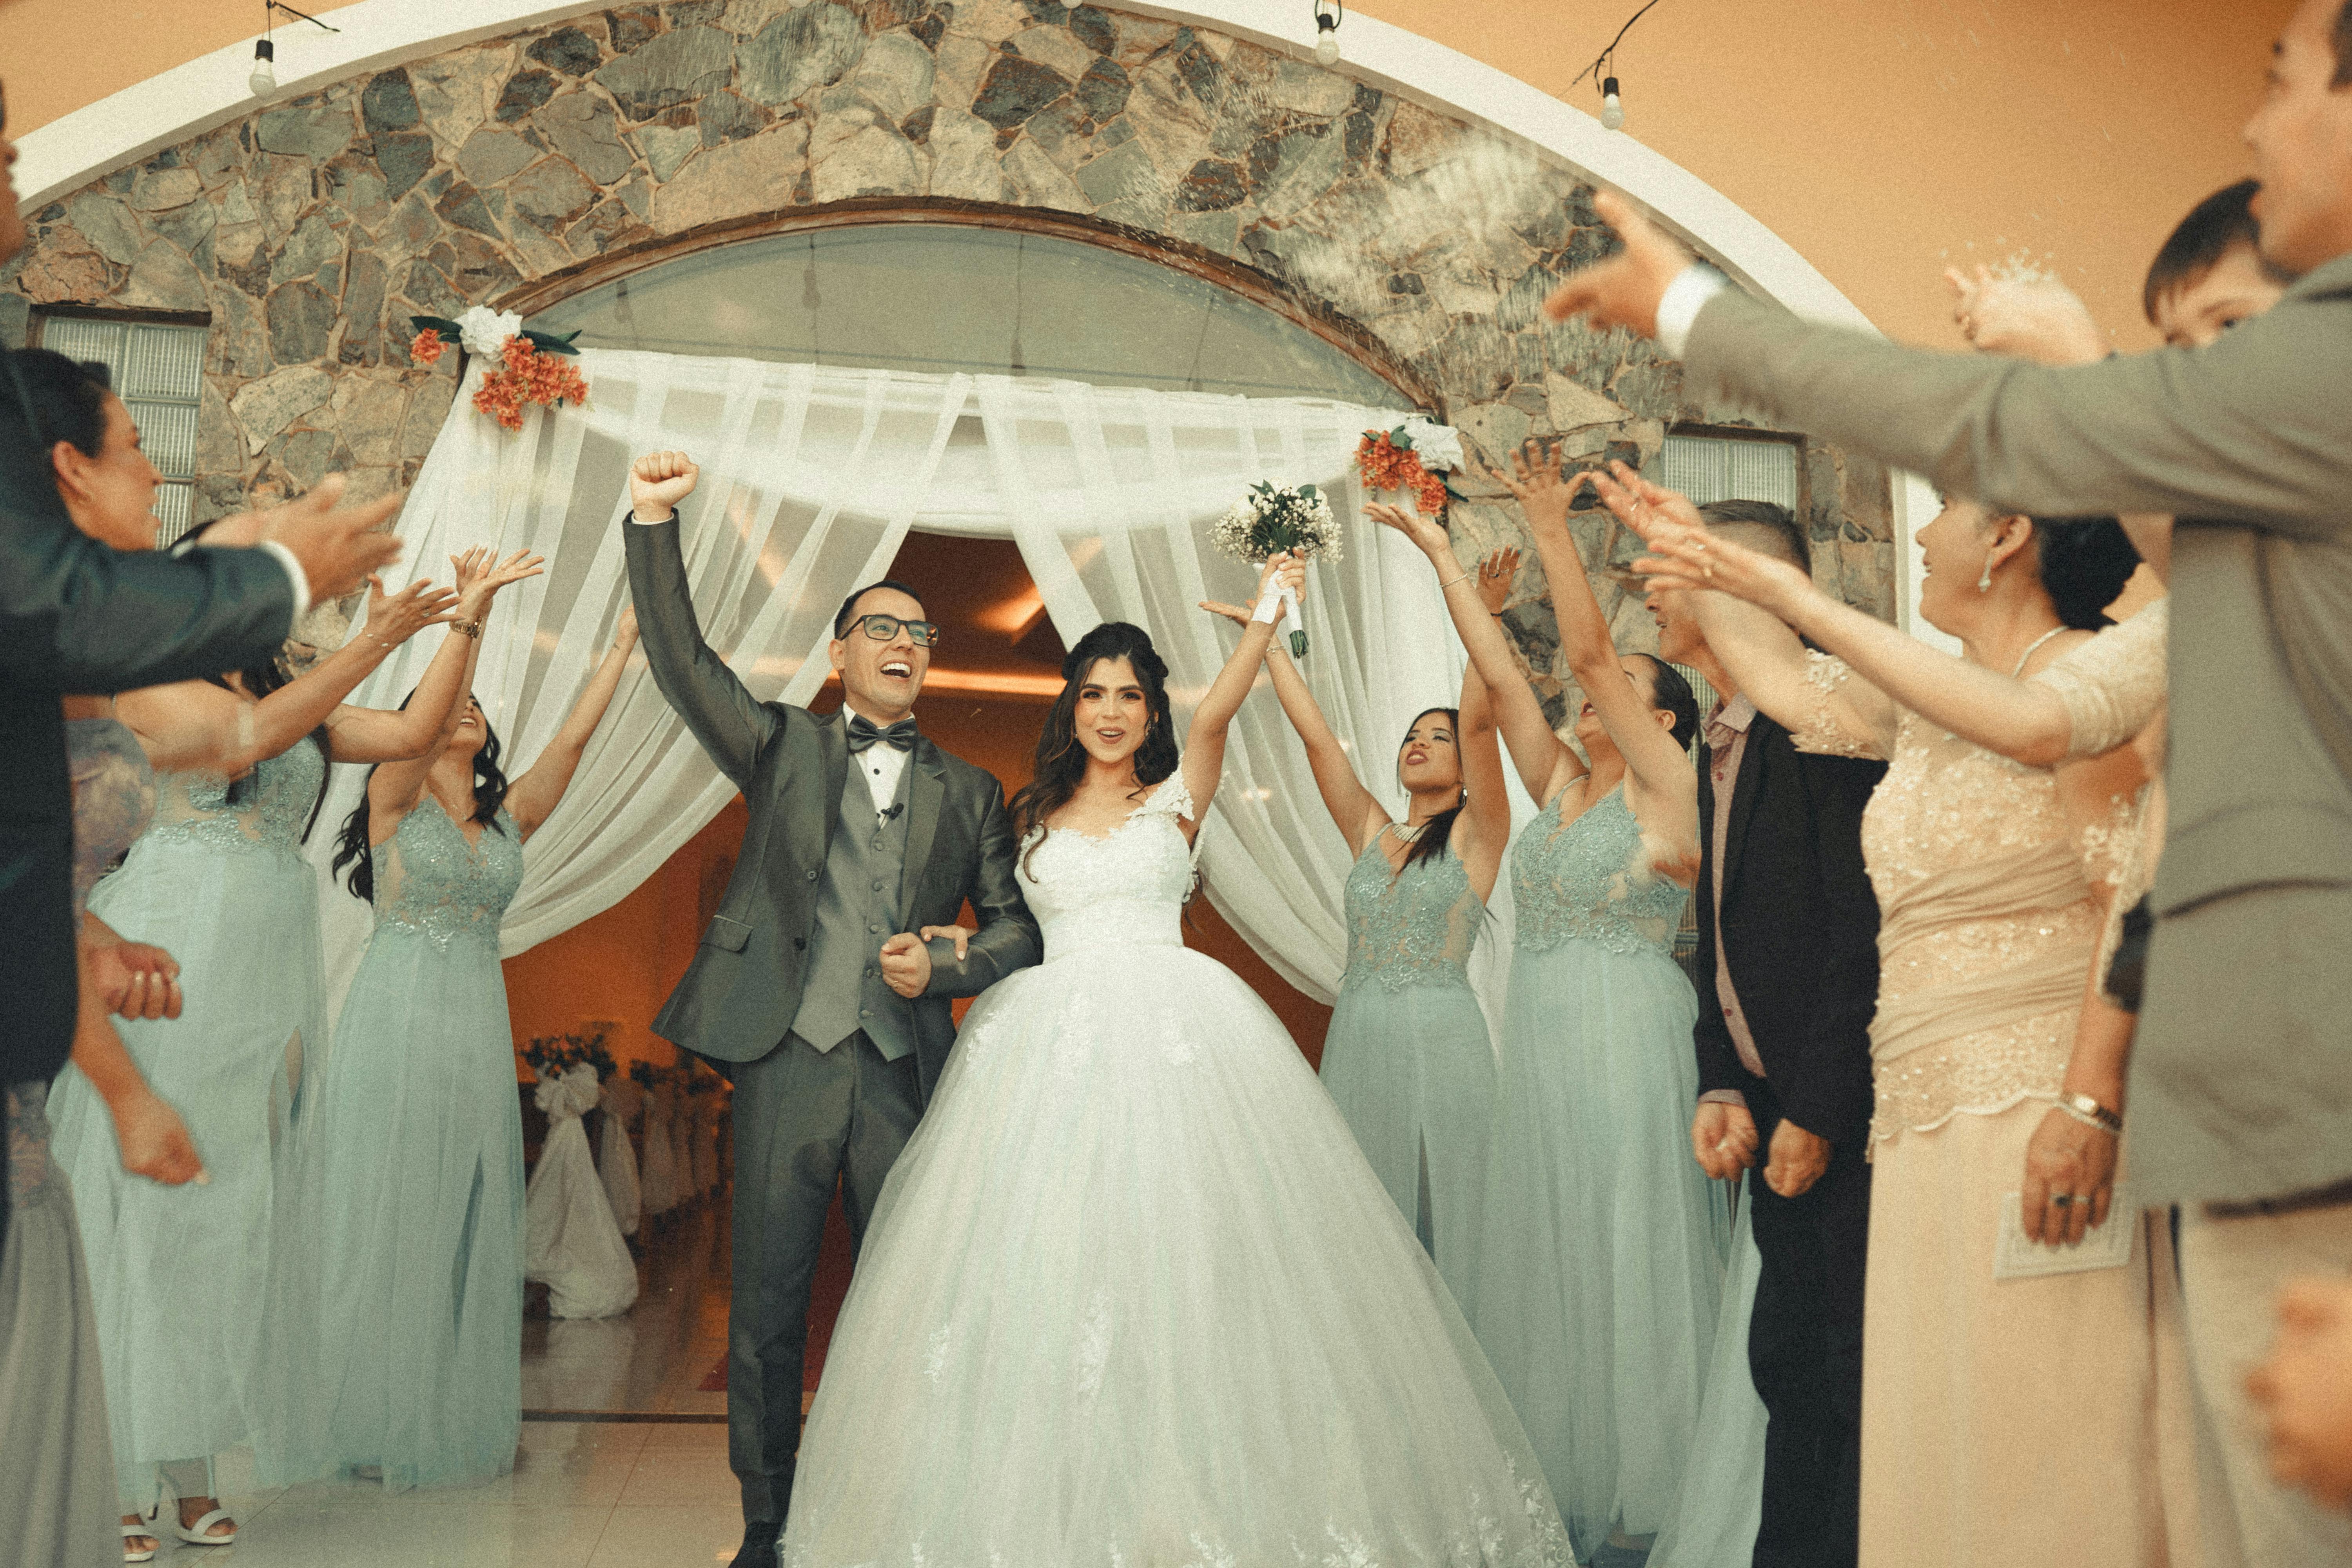 A bride and wedding guests  Source: Pexels